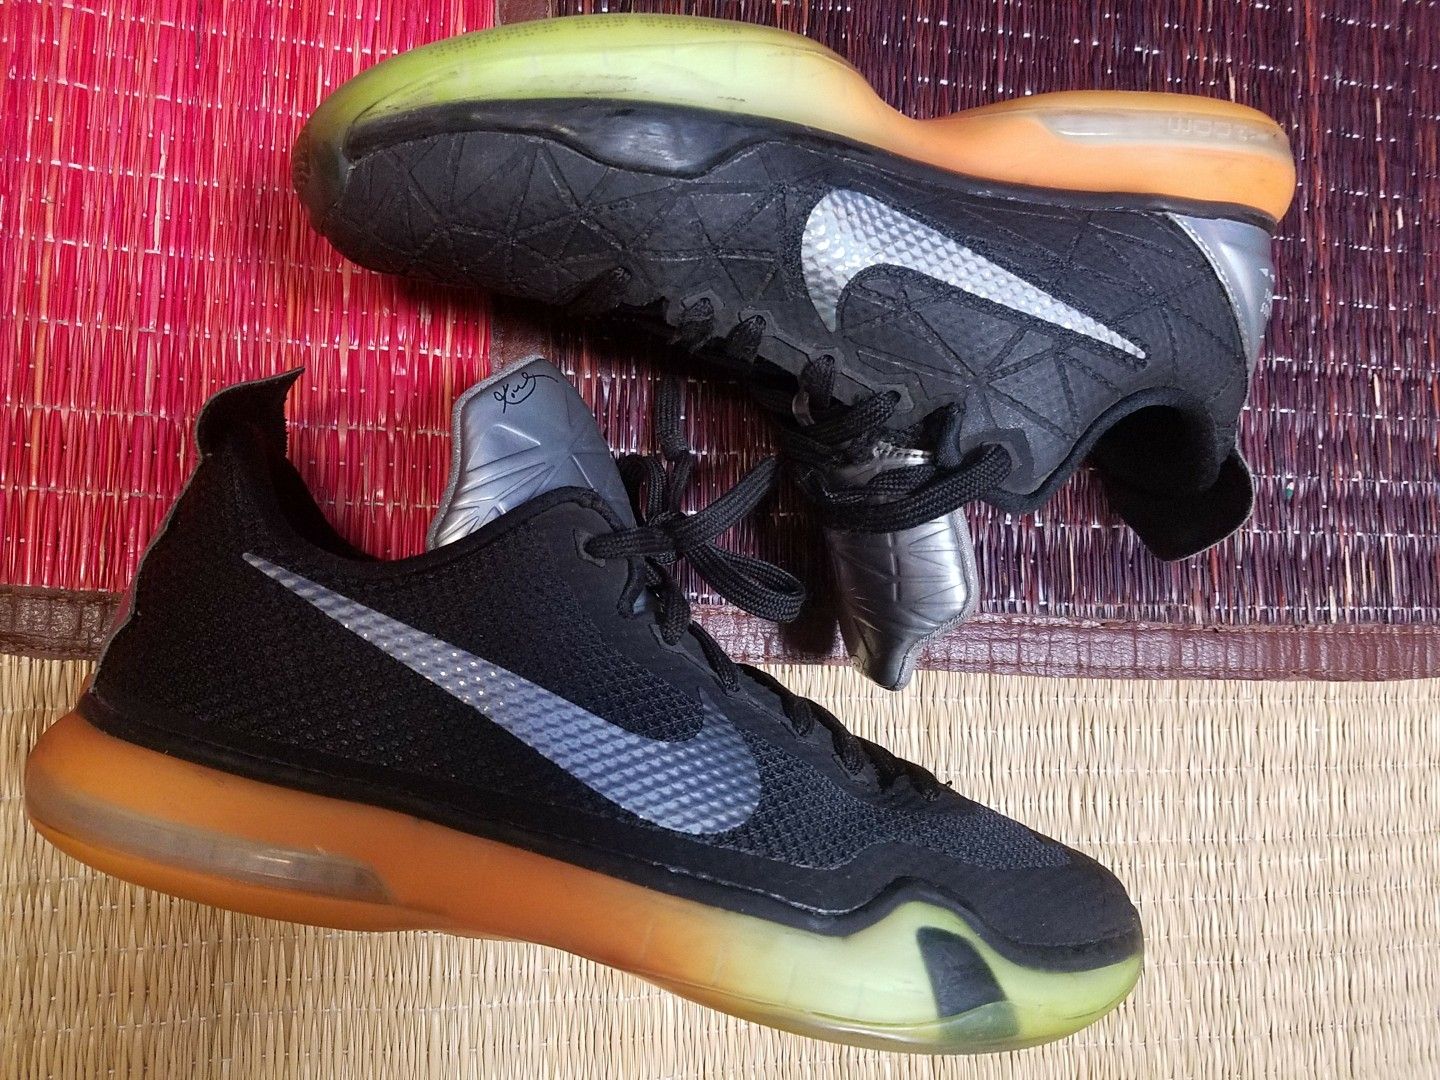 Nike Kobe shoes